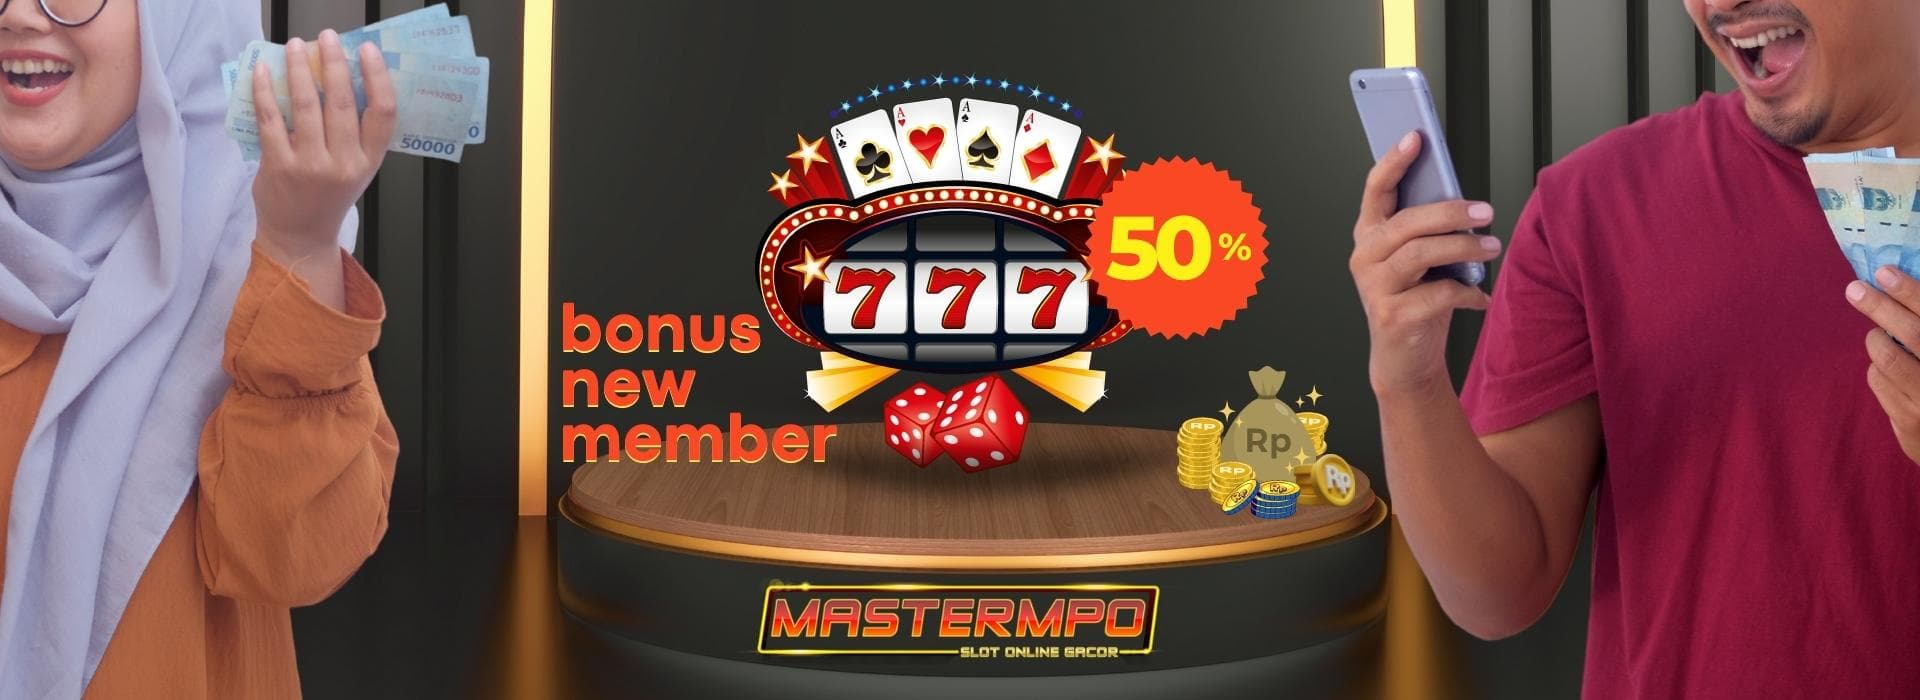 bonus-new-member-mastermpo.jpeg?e47ed69d6e67d4b49a0ff4eff95ea571